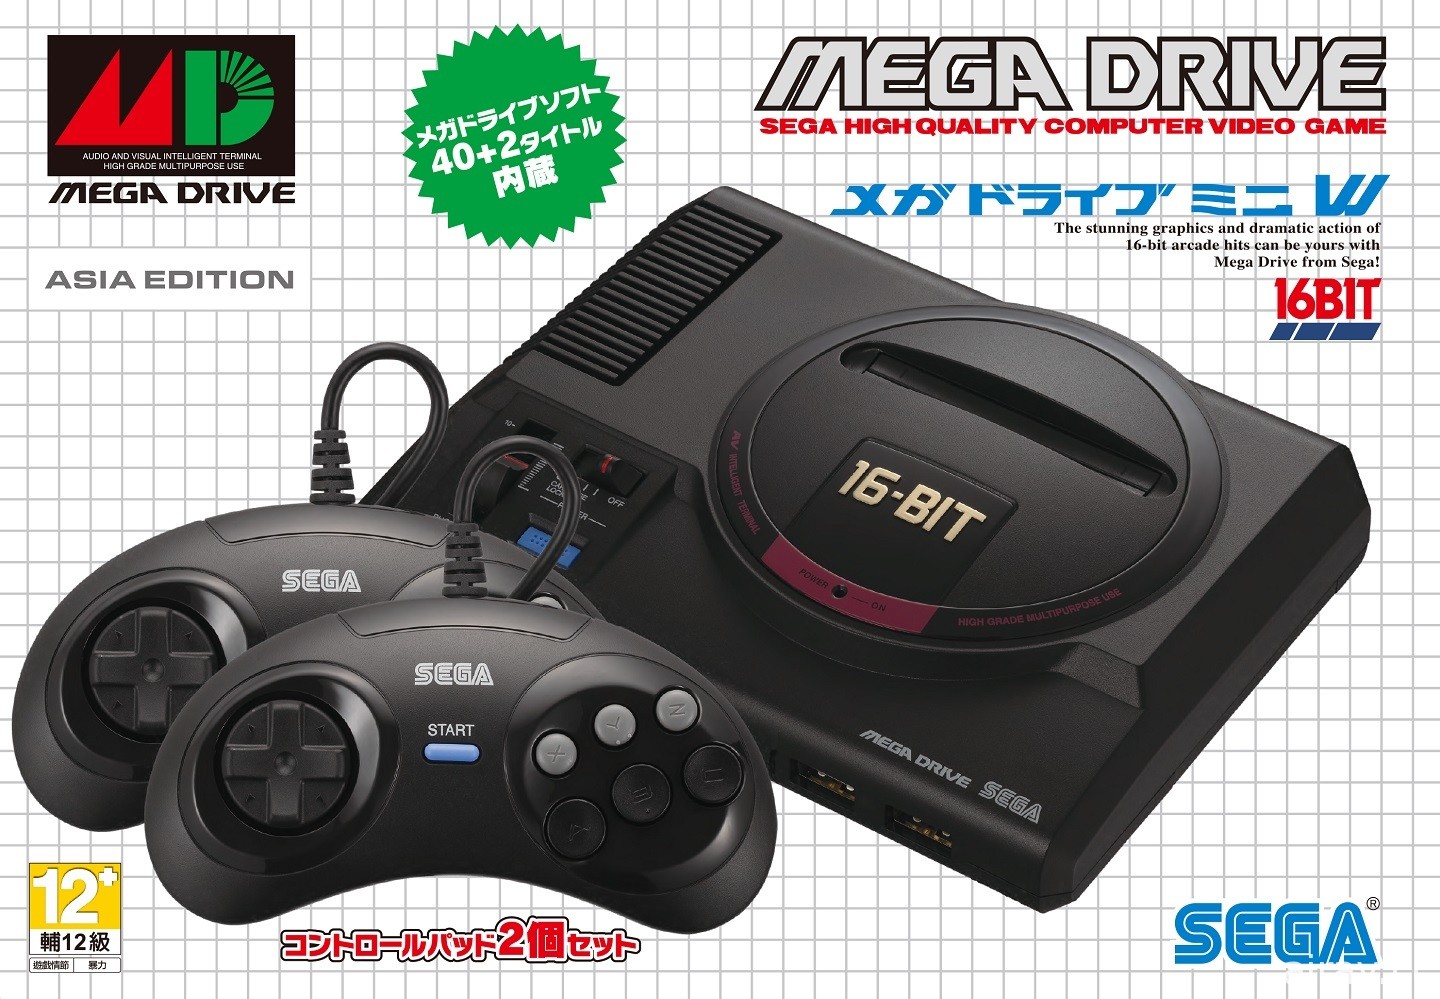 SEGA 宣布 60 週年特別贈獎活動 9 月活動贈品為「Mega Drive Mini」